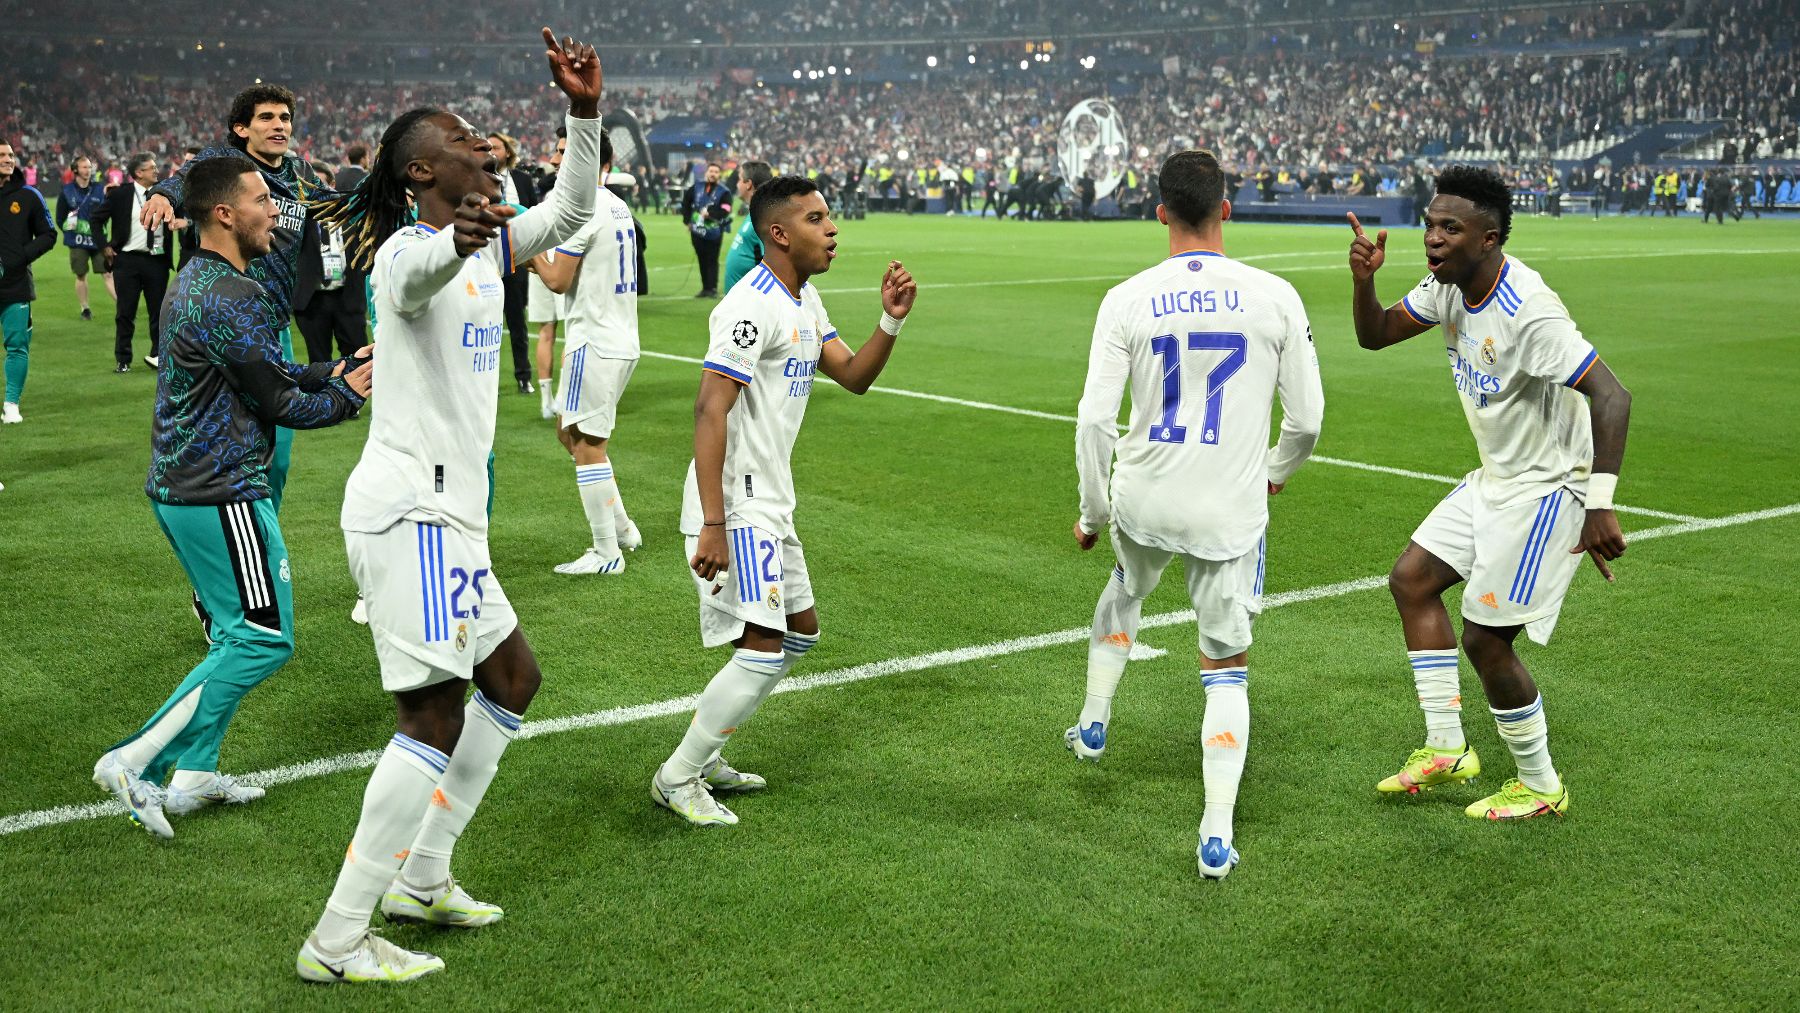 El Real Madrid llega a la final de la Liga de Campeones tras